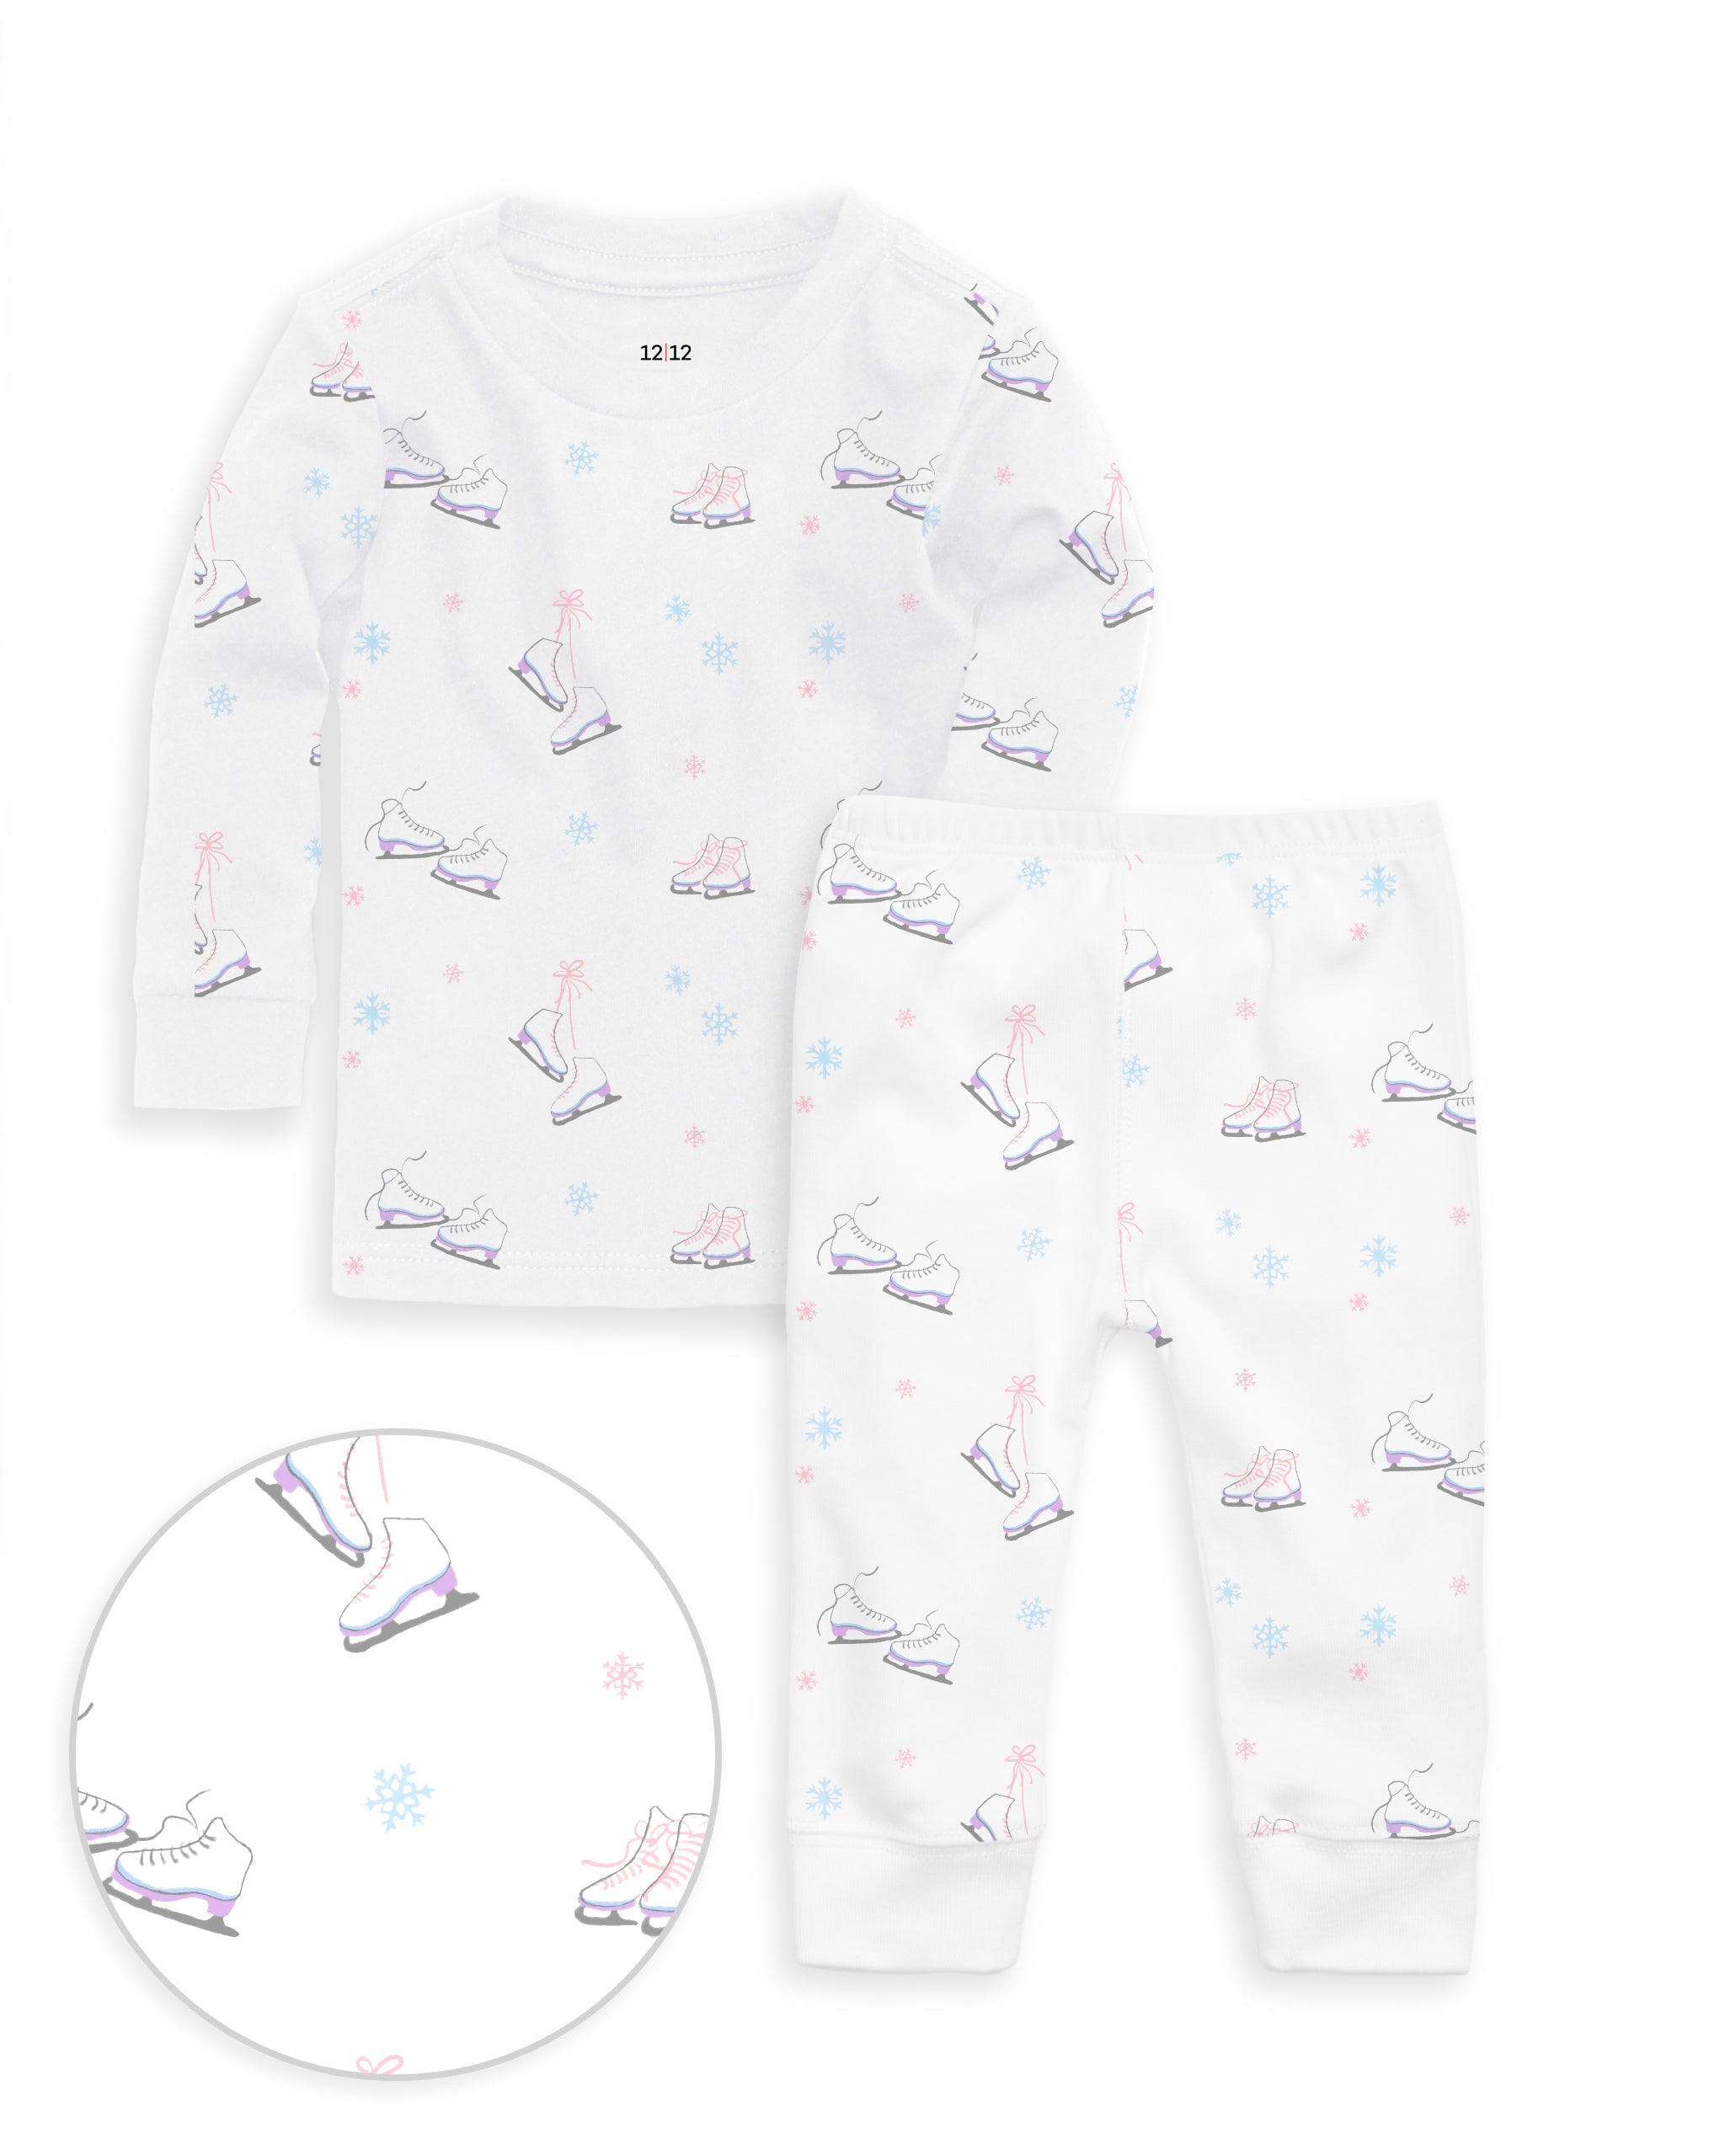 The Organic Long Sleeve Pajama Set [Ice Skates]